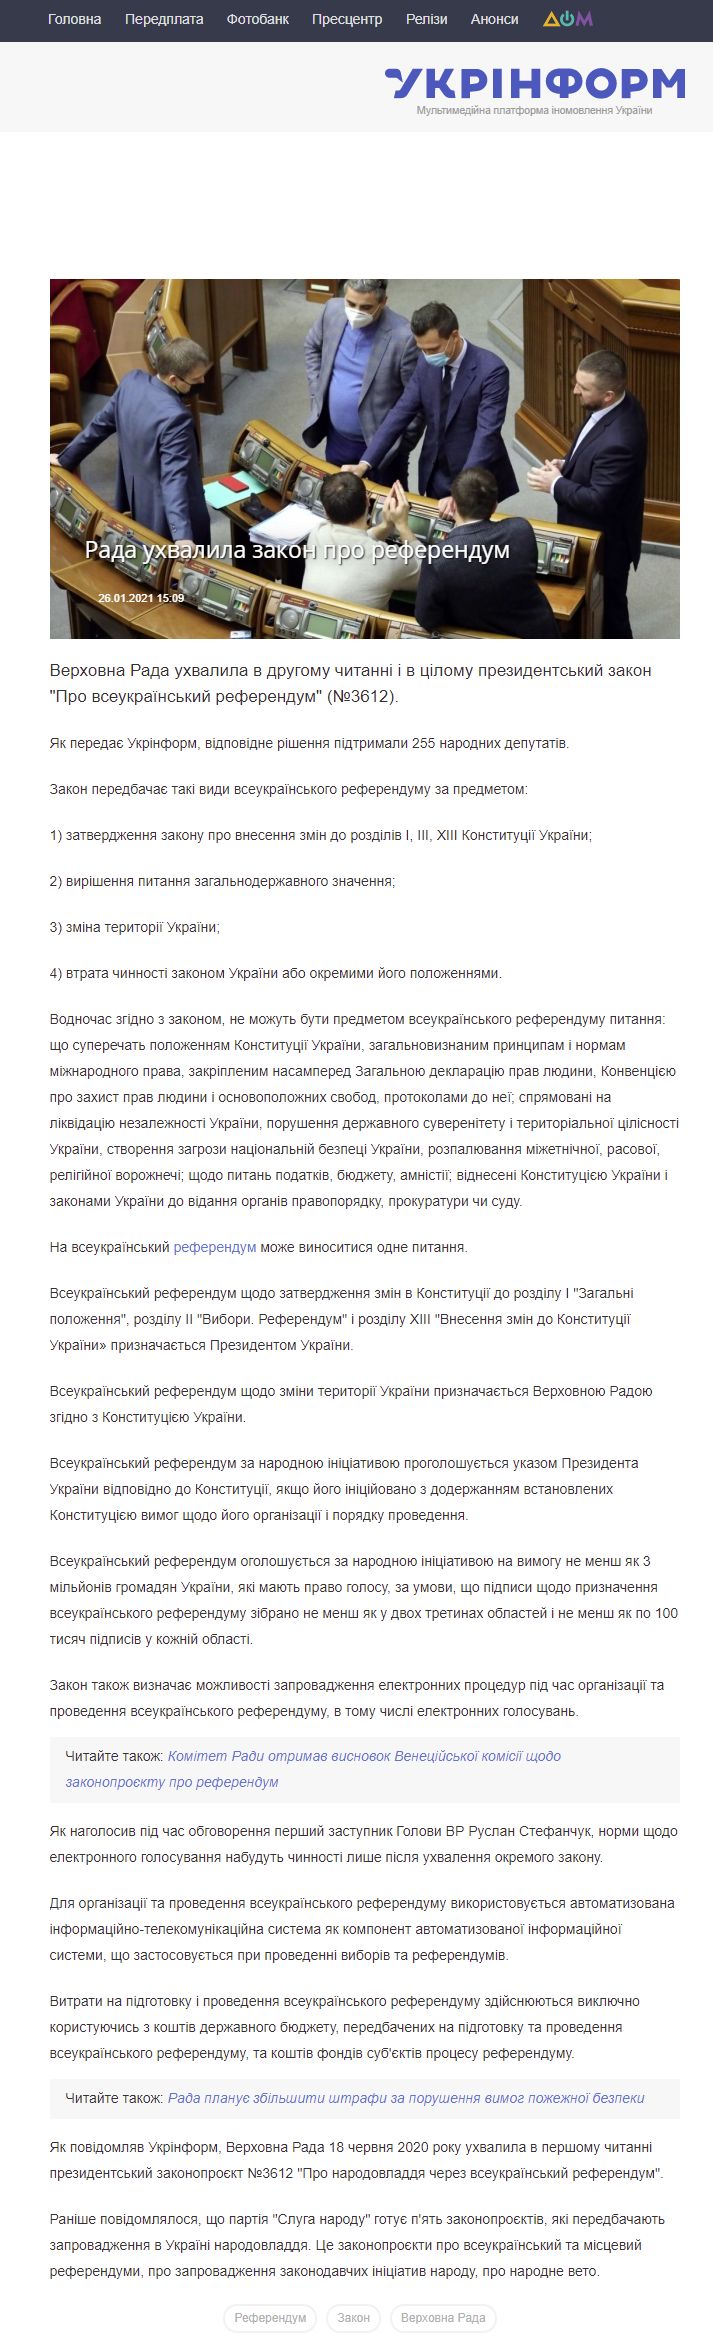 https://www.ukrinform.ua/rubric-polytics/3178330-rada-uhvalila-zakon-pro-referendum.html